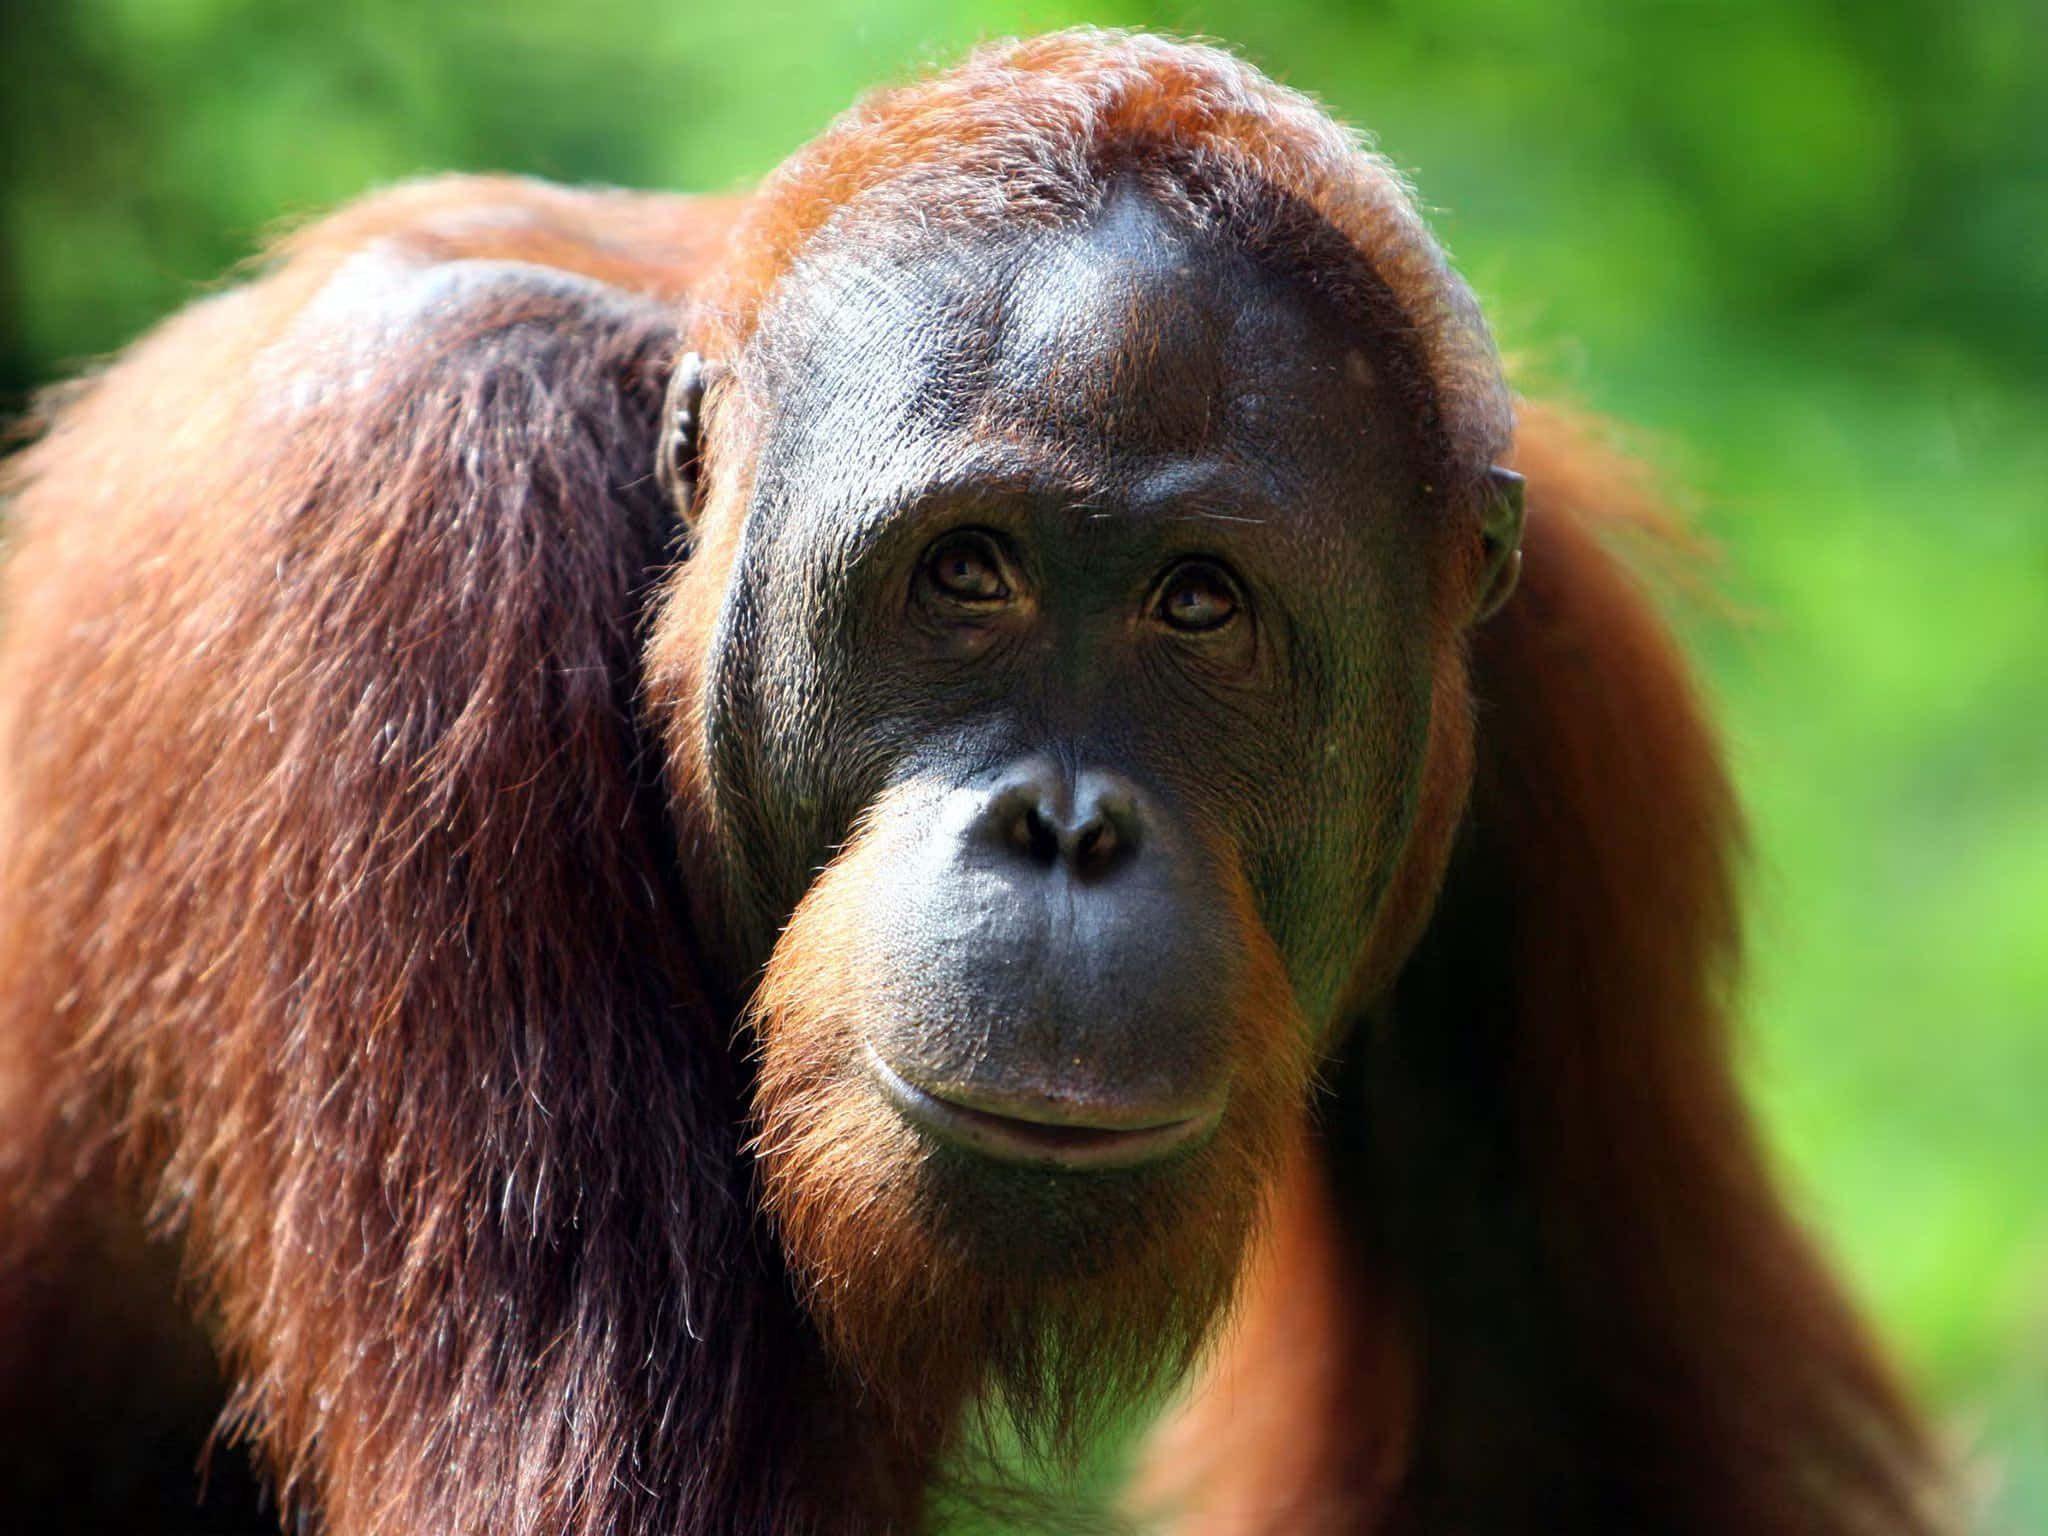 An Orangutan in its Natural Habitat